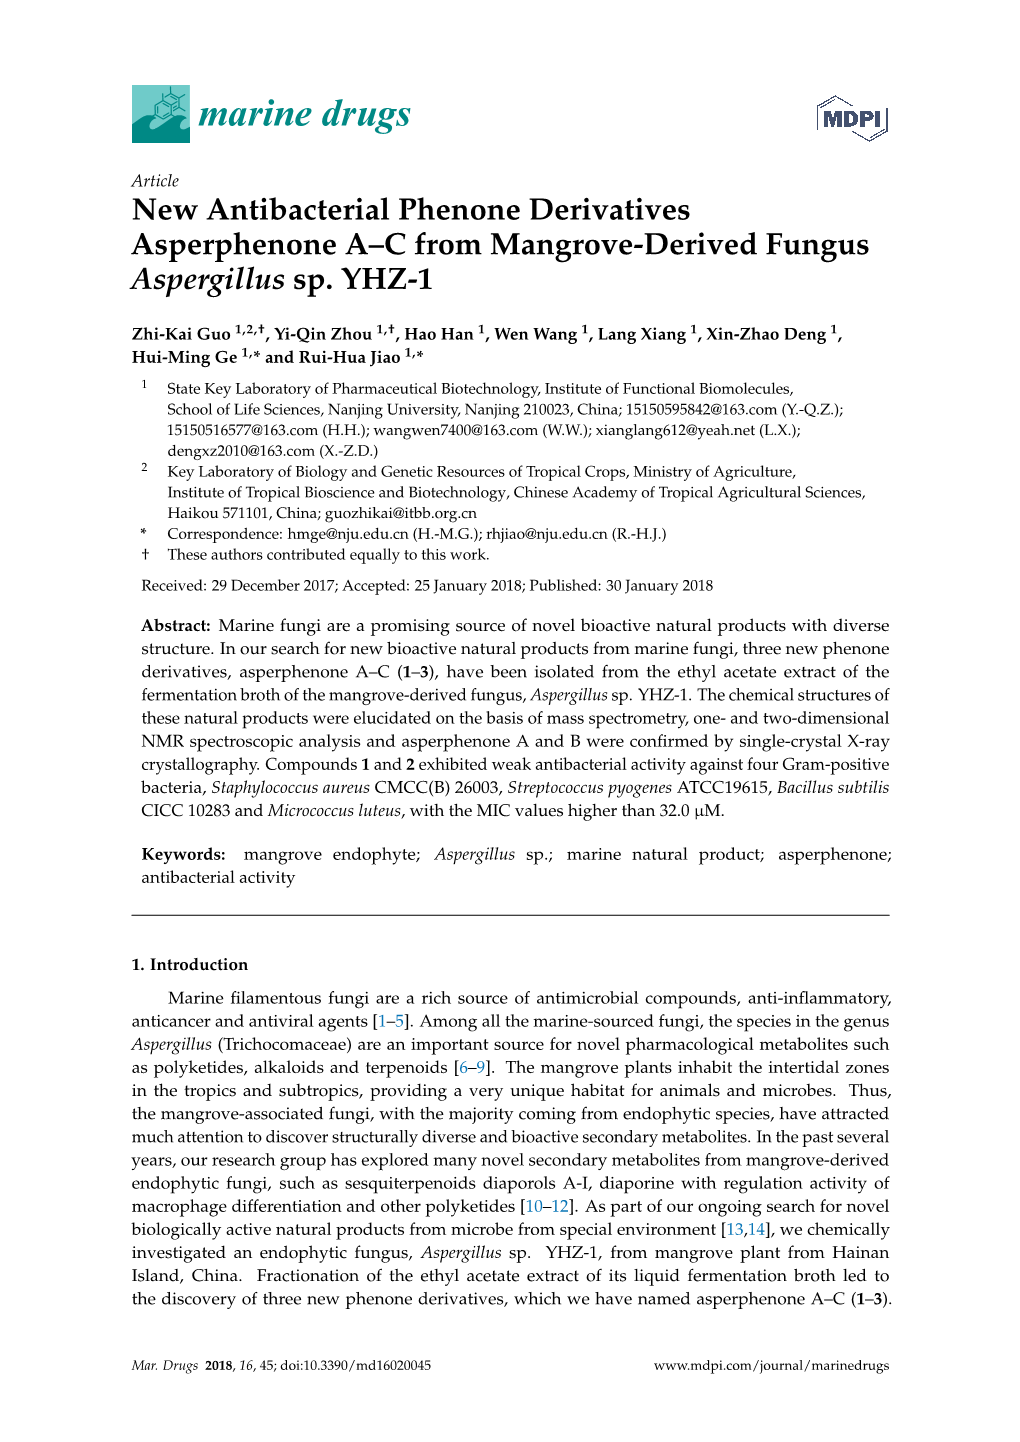 New Antibacterial Phenone Derivatives Asperphenone A–C from Mangrove-Derived Fungus Aspergillus Sp